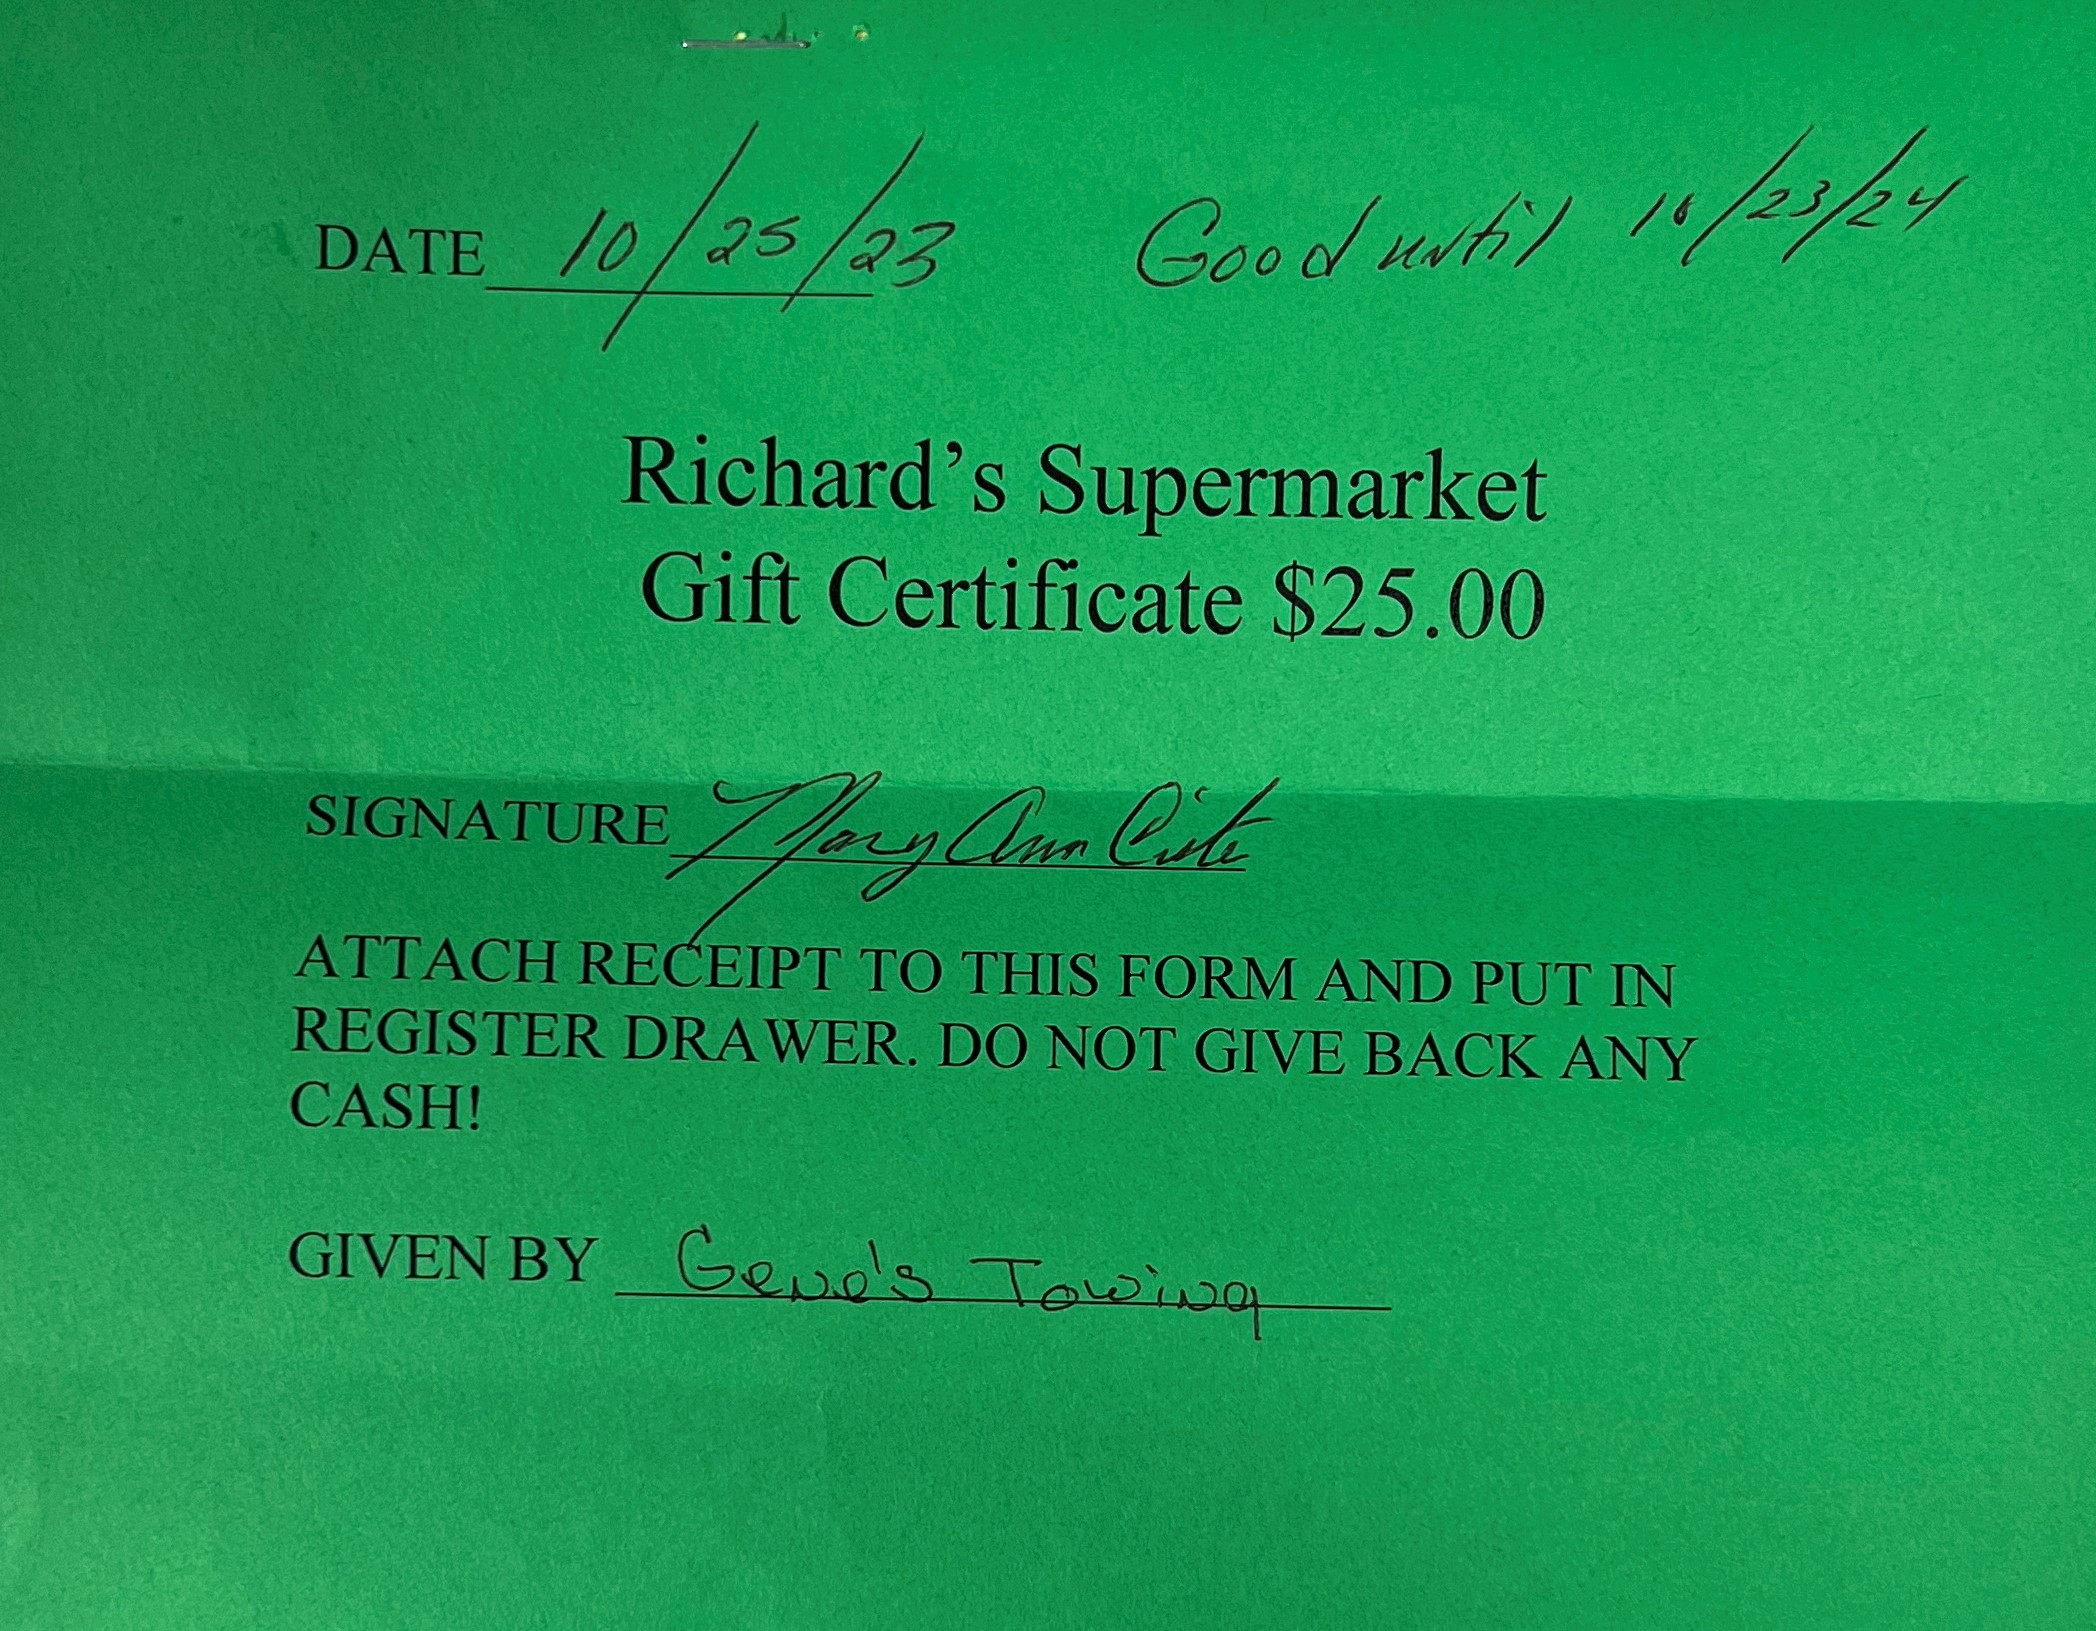 $25 Gift Certificate to Richard's Supermarket